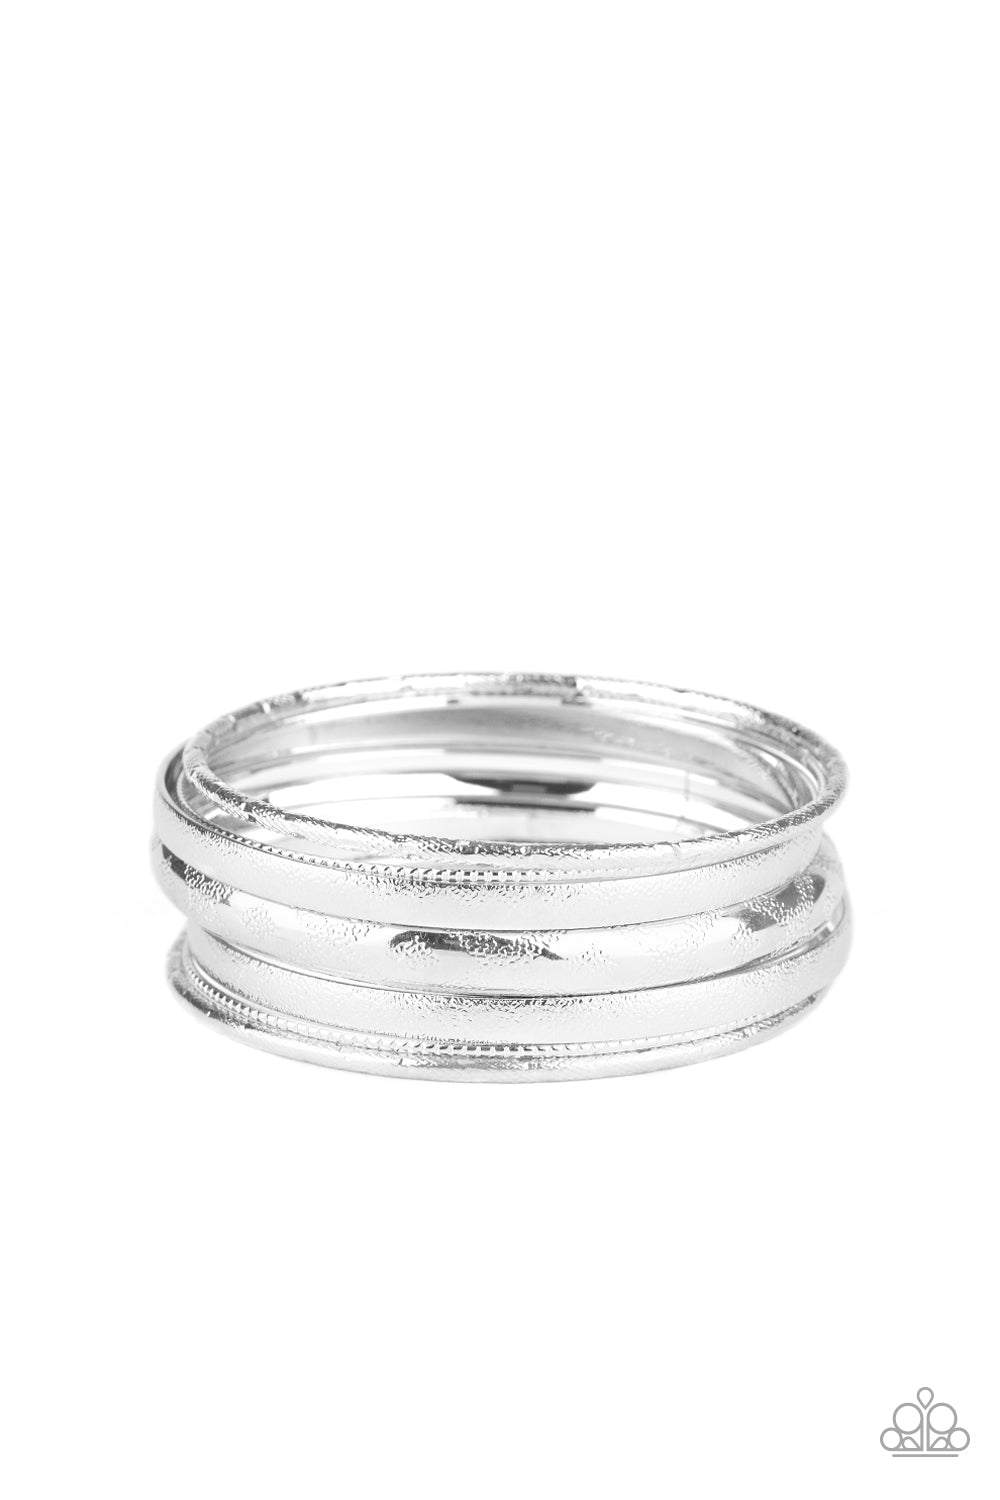 Basic Bauble Silver Bracelet